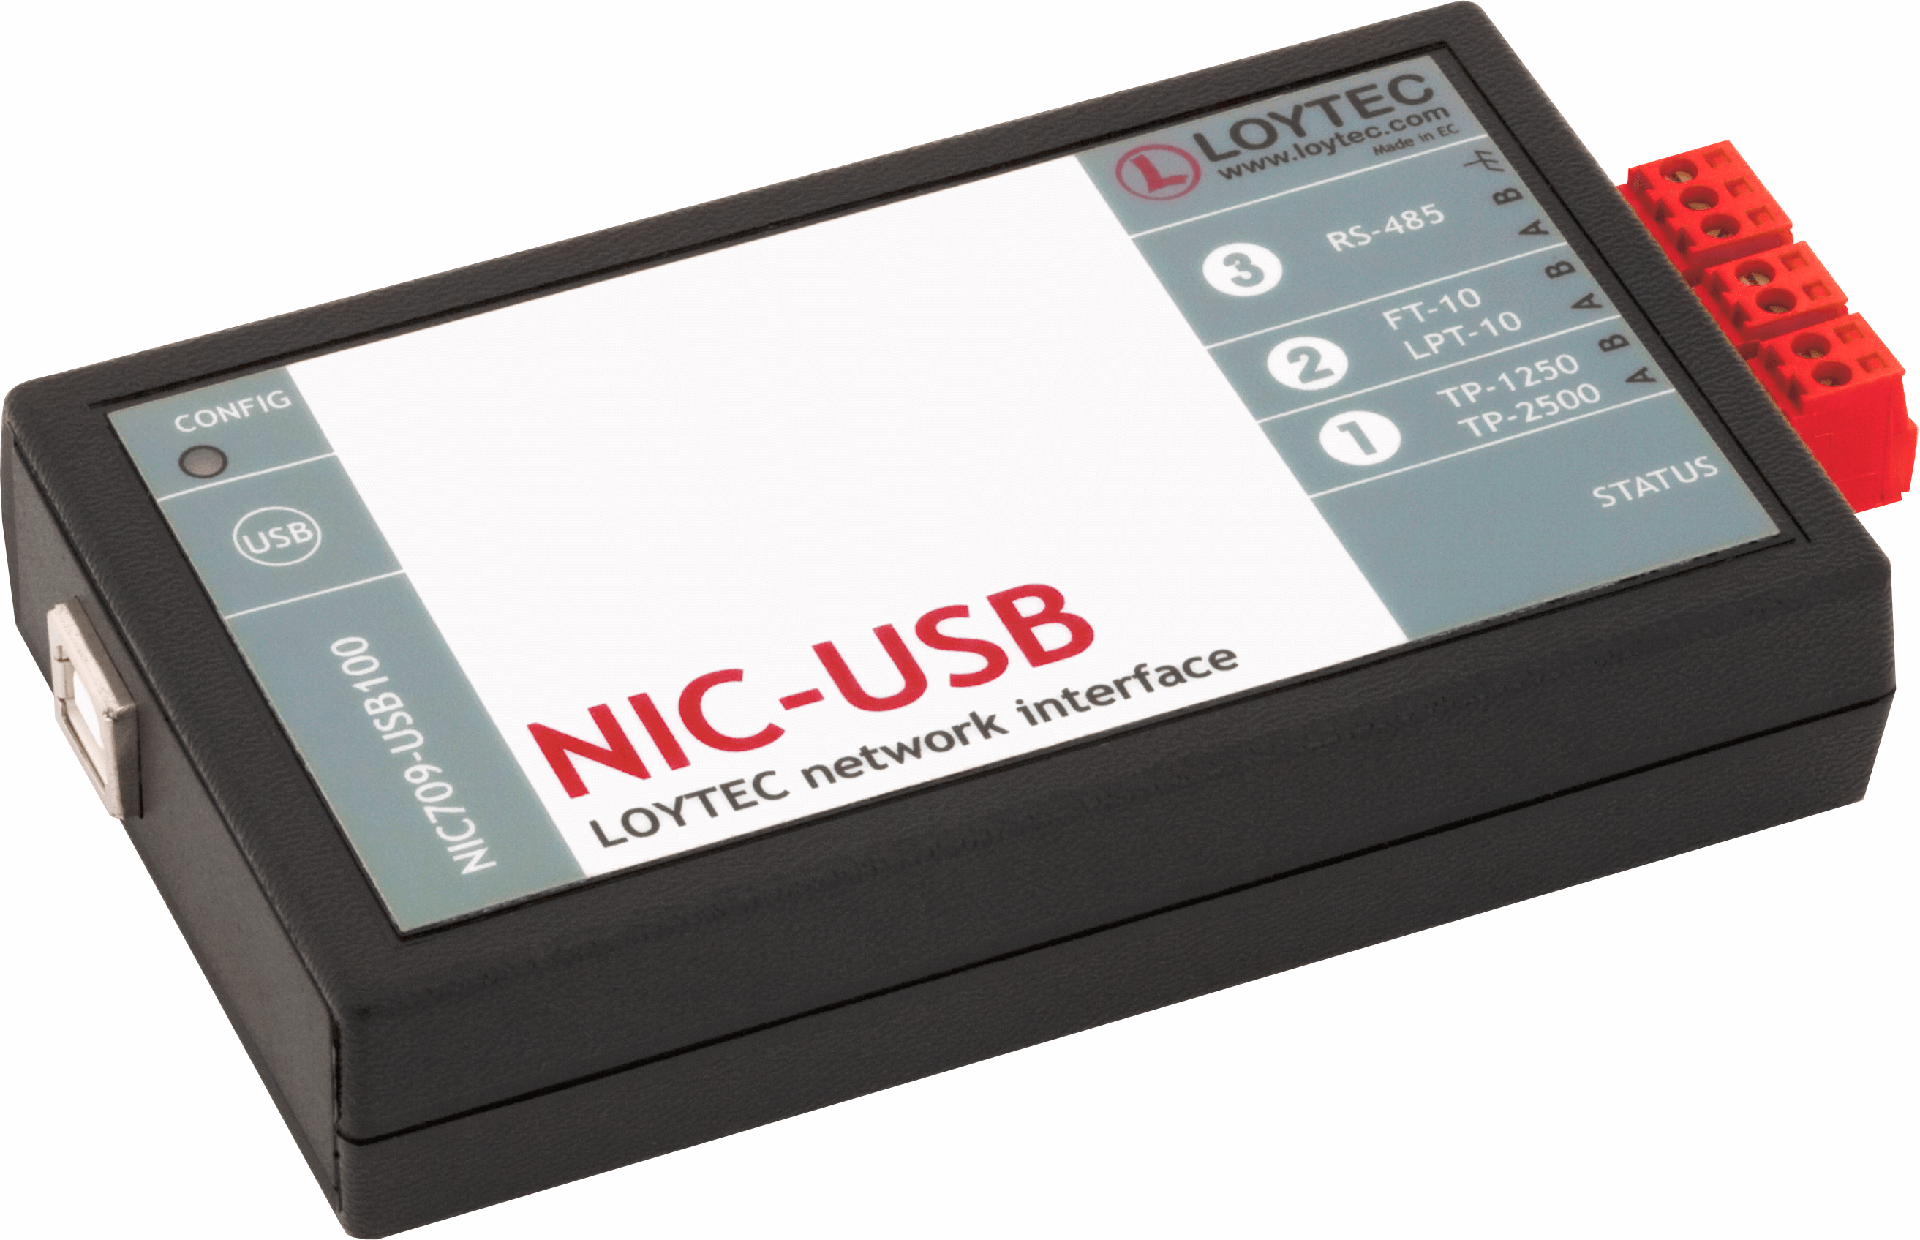 NIC709-USB100 	
USB-Interface